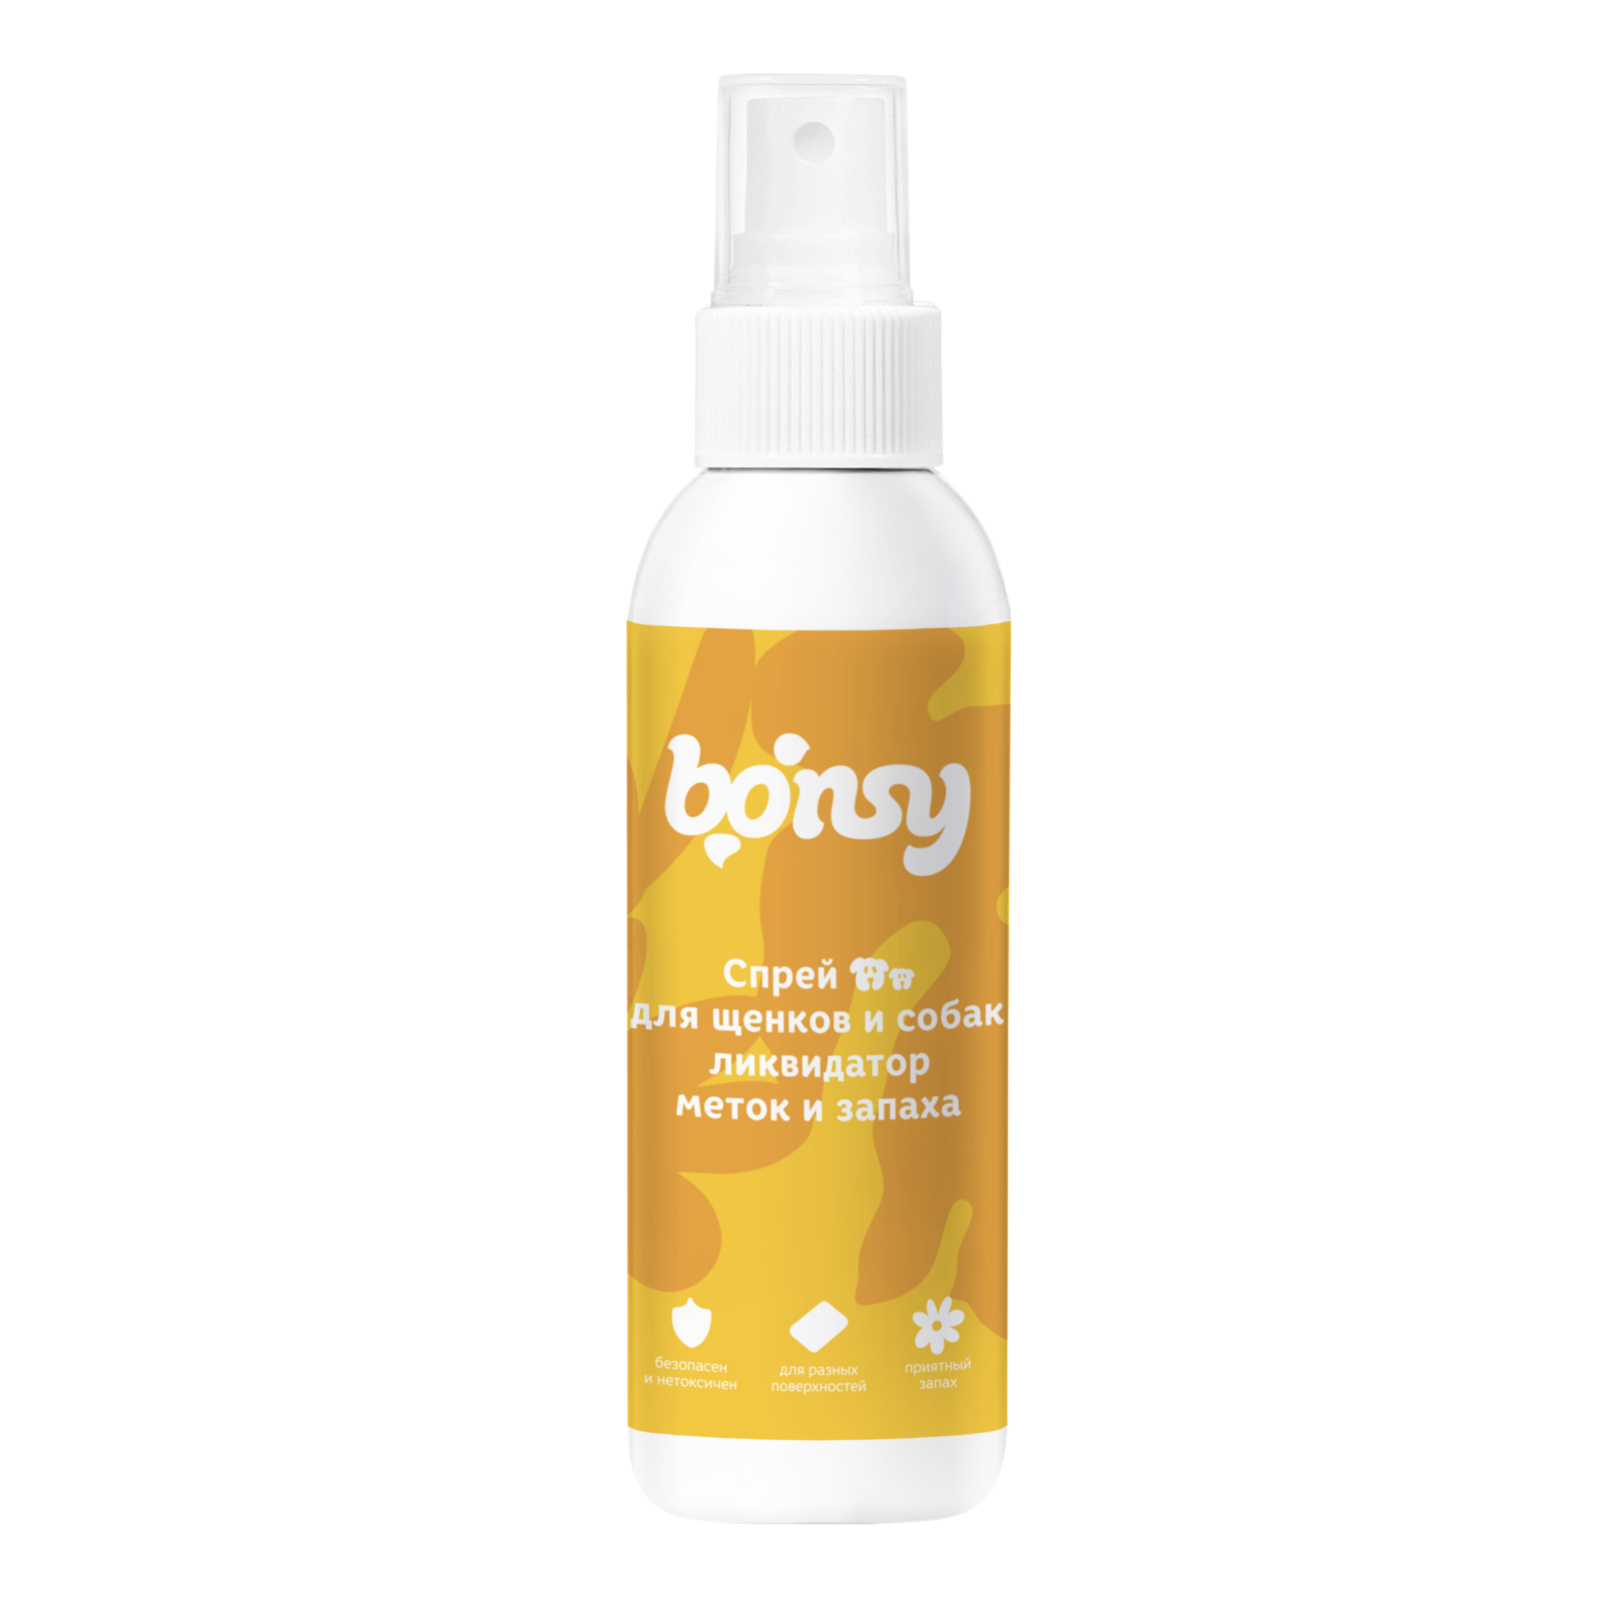 Bonsy Bonsy спрей «Ликвидатор меток и запаха» для щенков и собак (150 г)